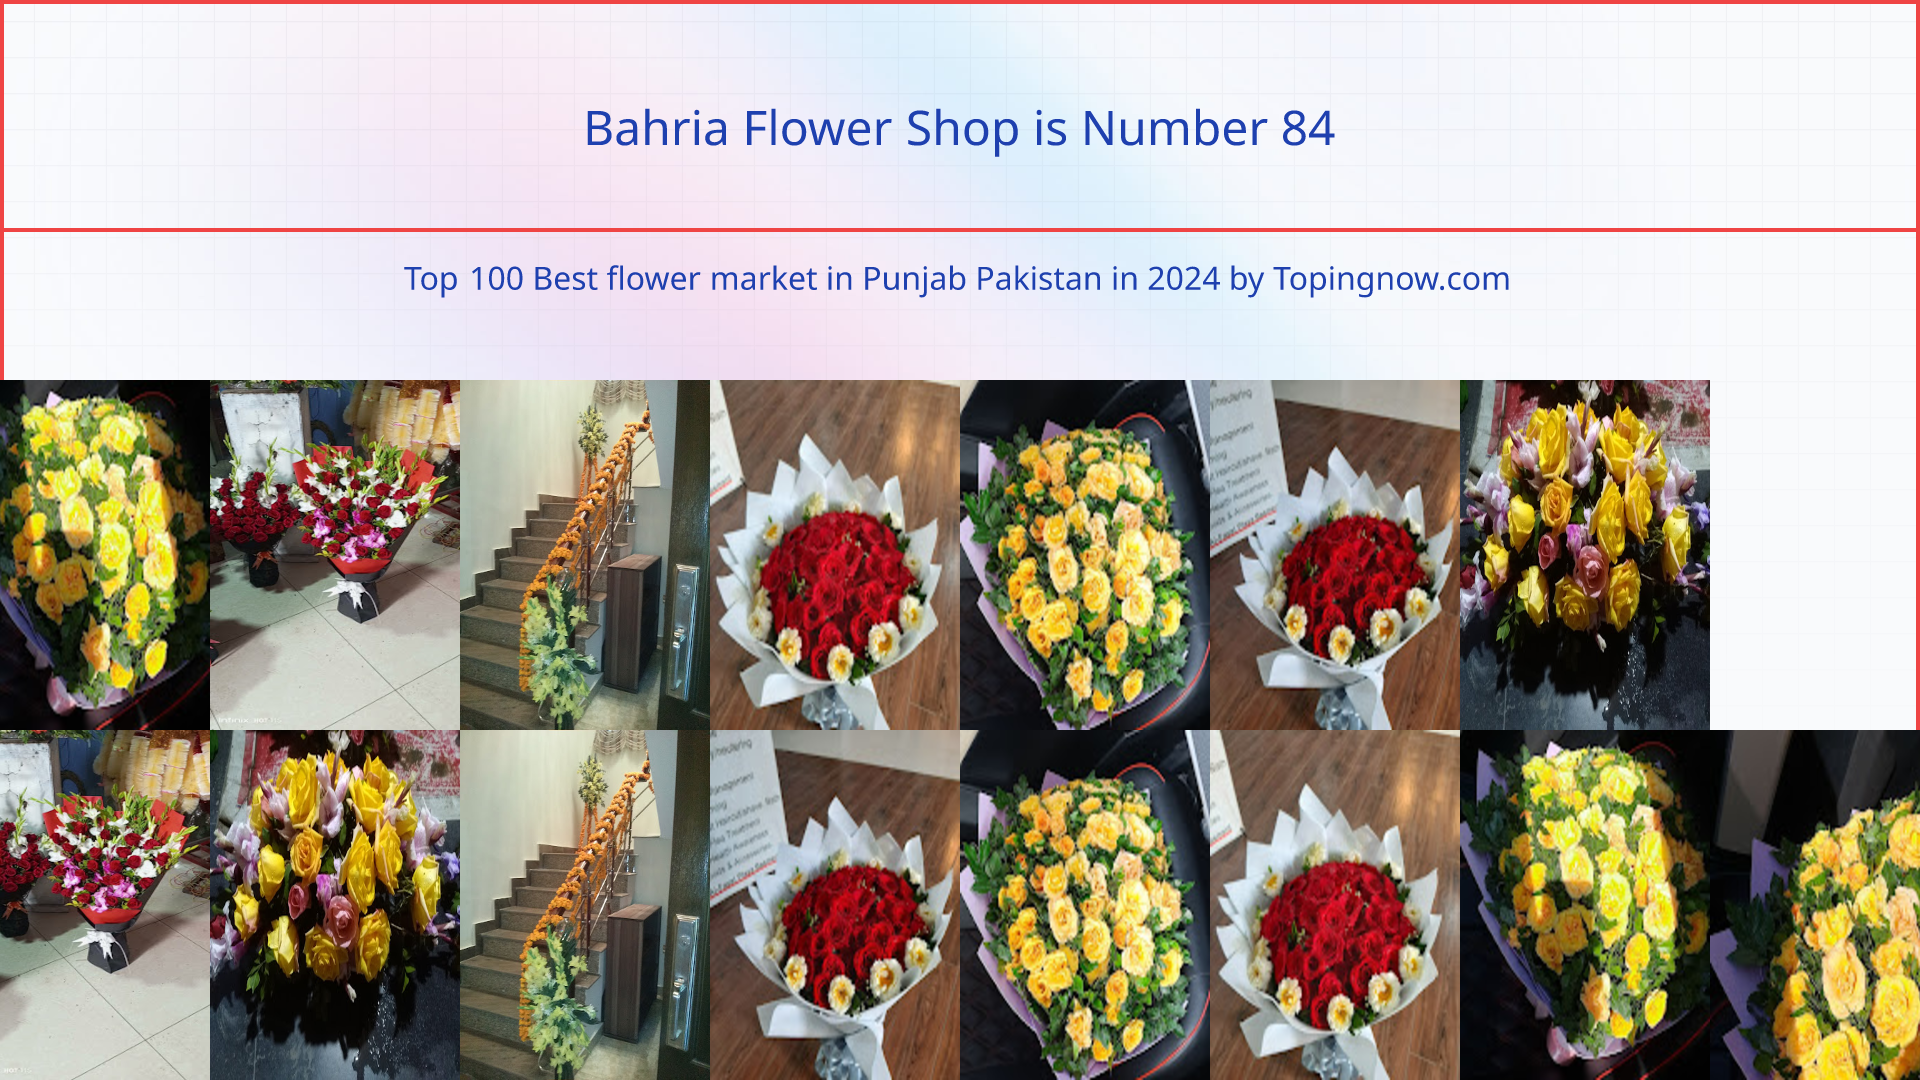 Bahria Flower Shop: Top 100 Best flower market in Punjab Pakistan in 2024